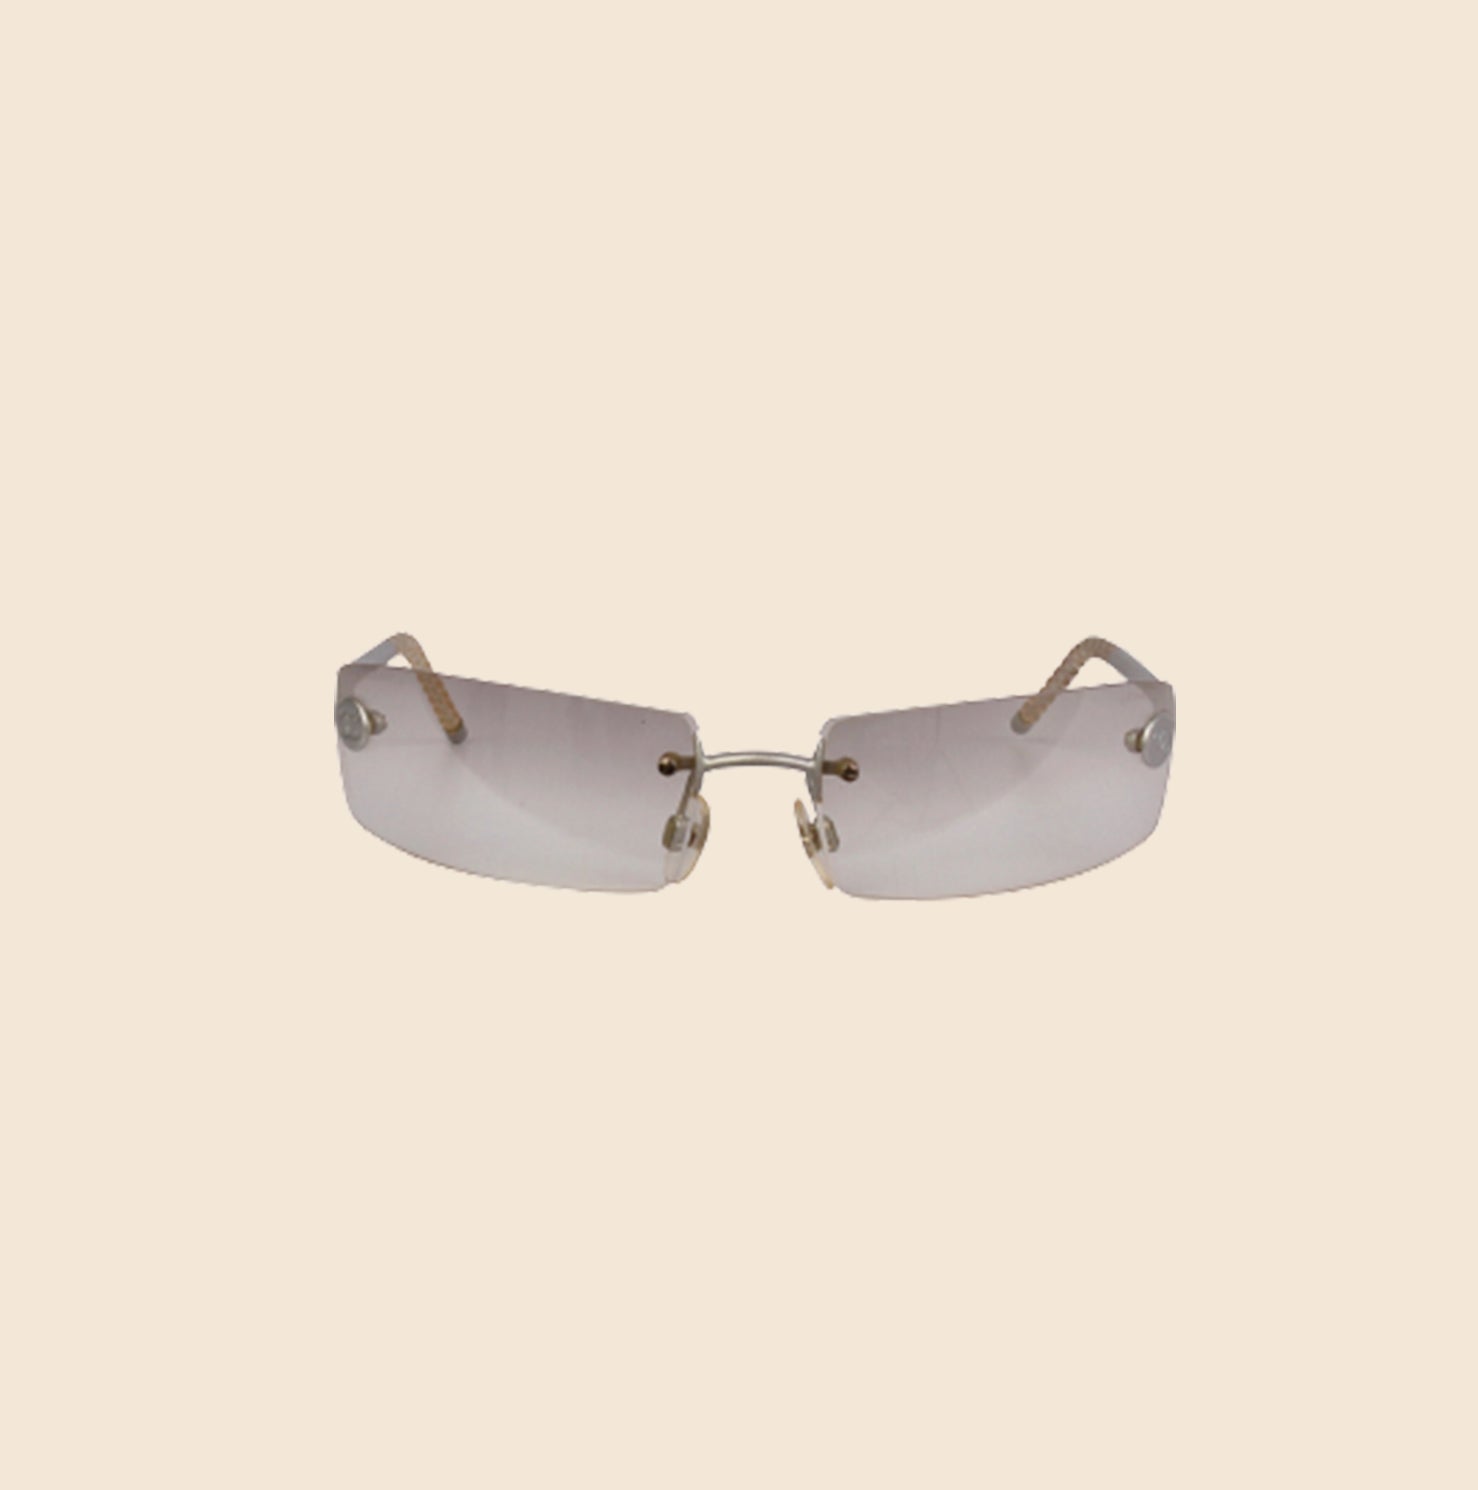 Chanel Designer Glasses & Sunglasses